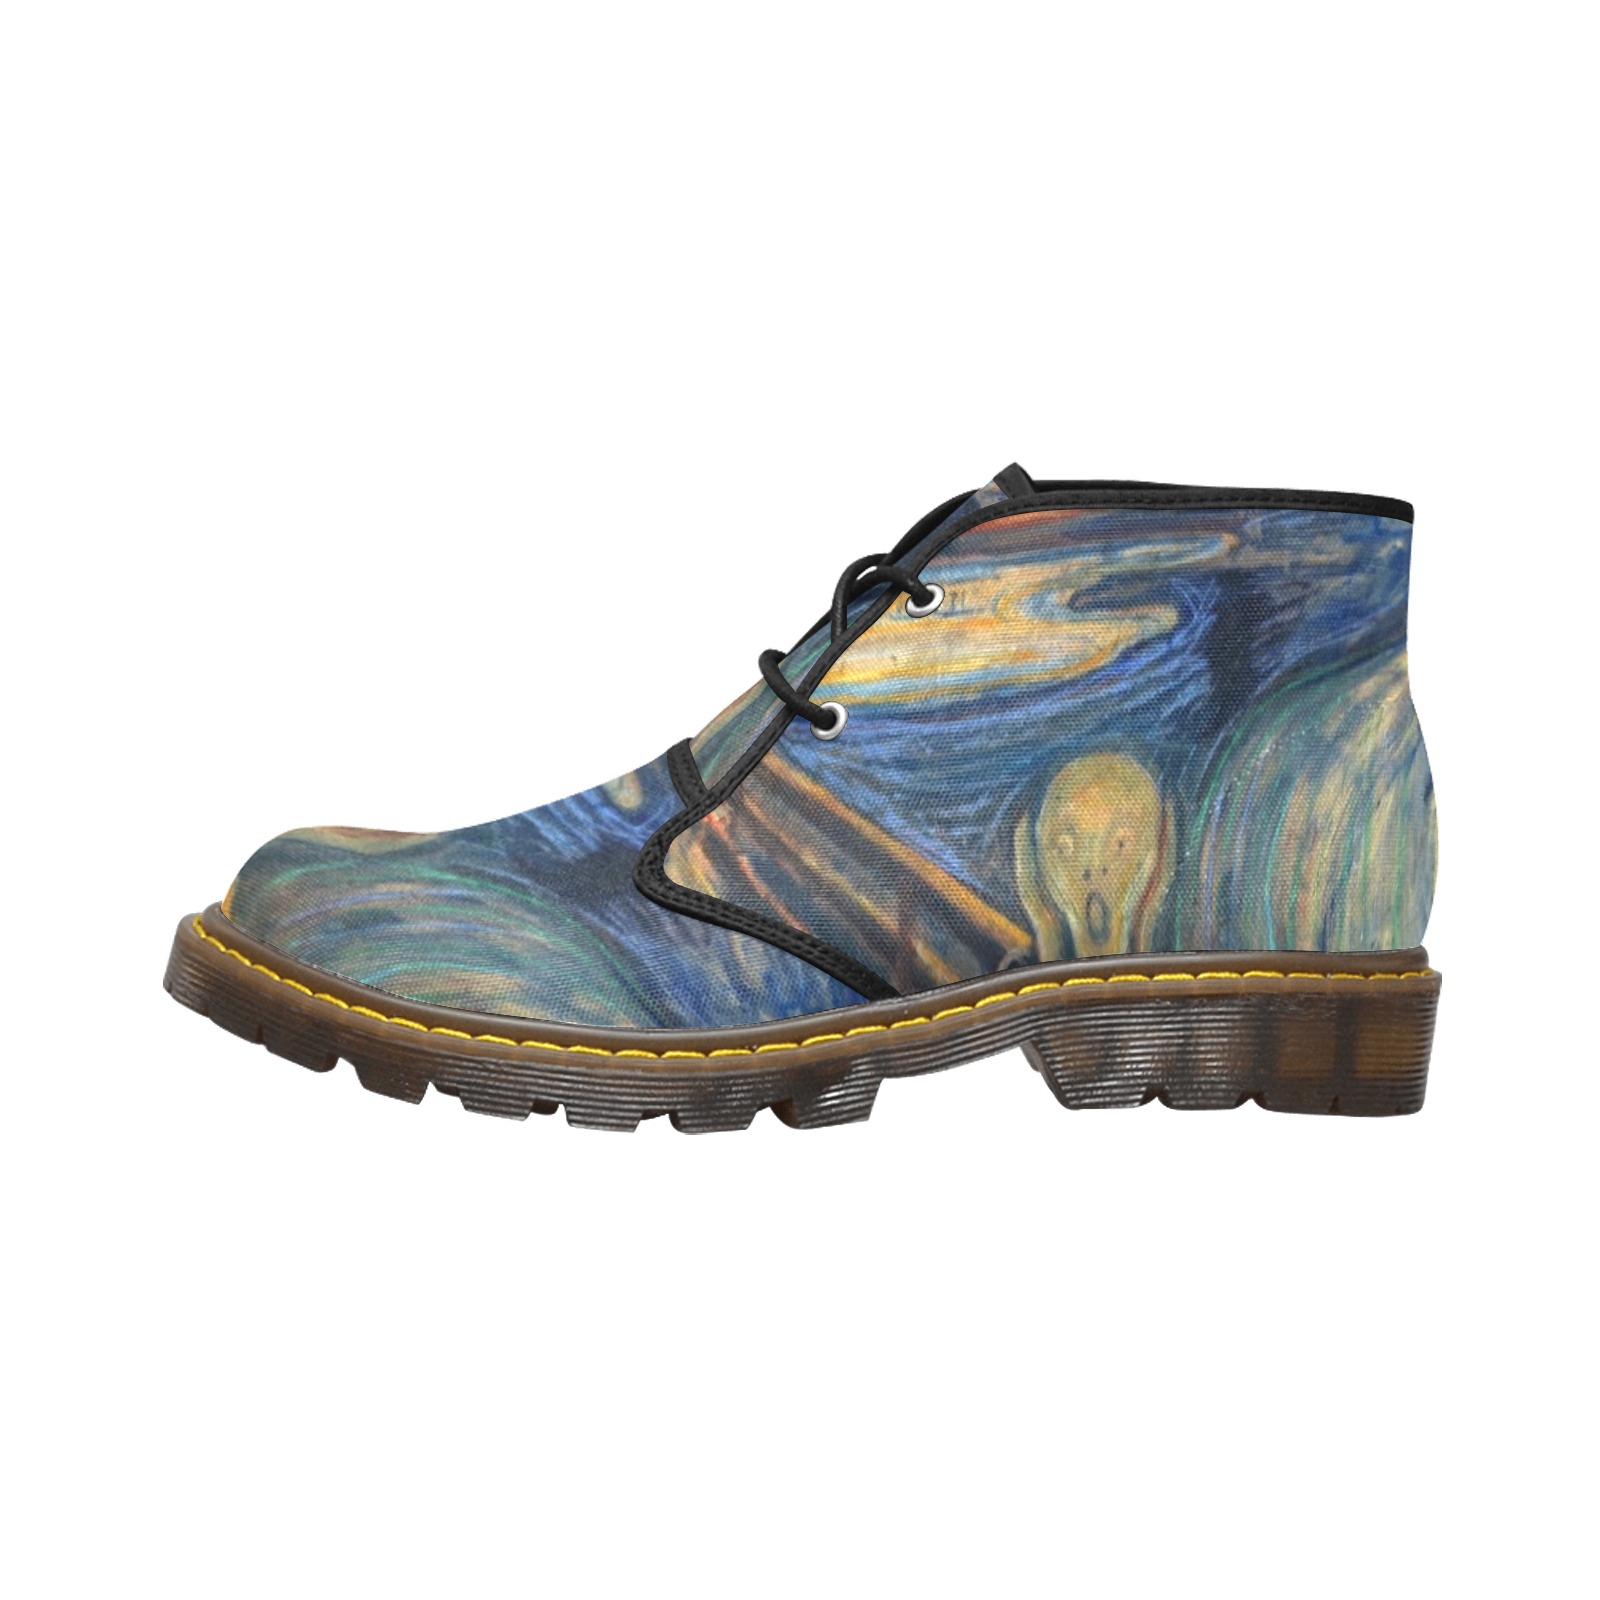 Edvard Munch-The scream Women's Canvas Chukka Boots (Model 2402-1)